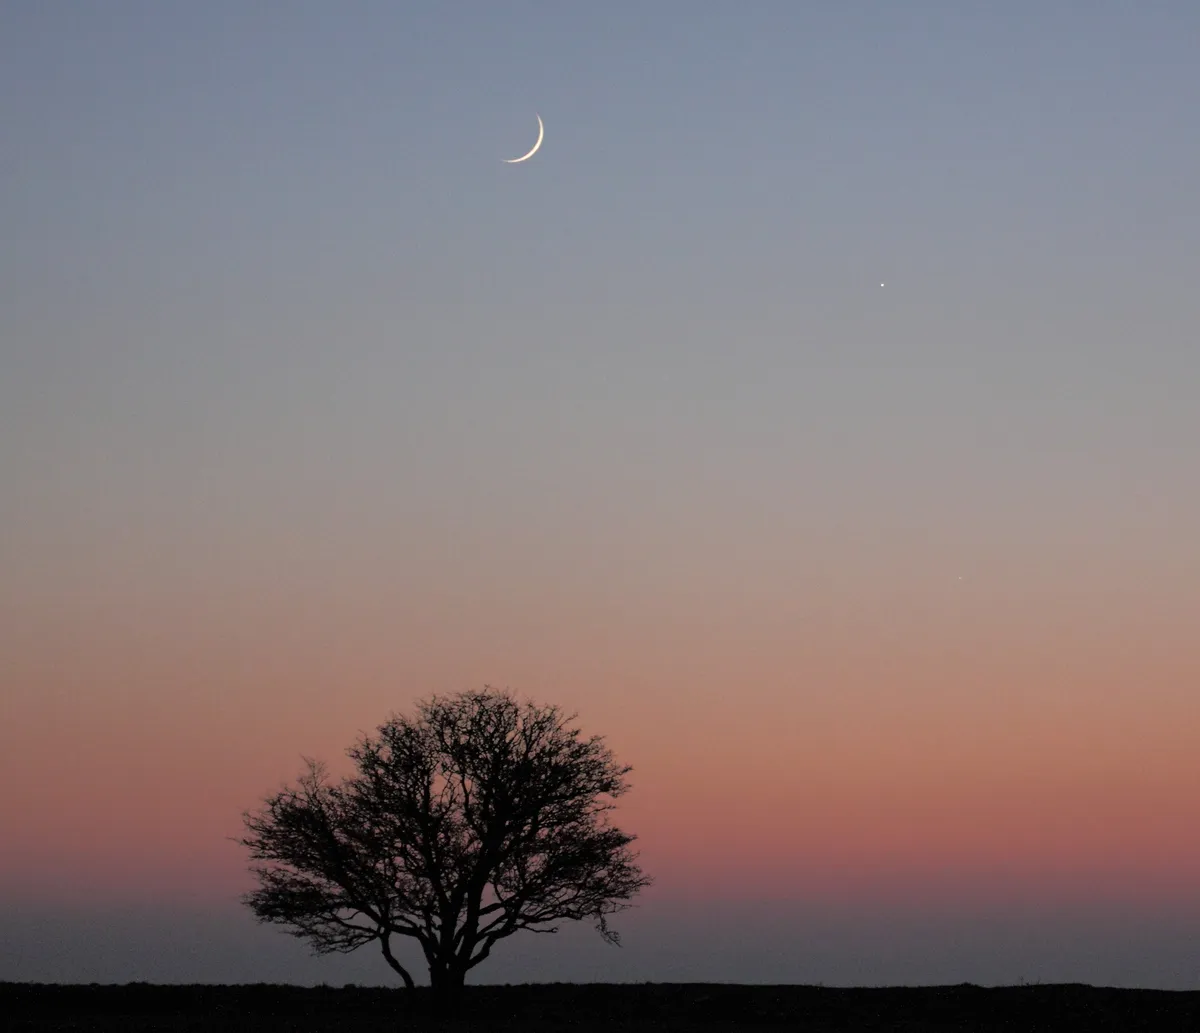 Moon, Jupiter and Mercury at Sunset by Brian.M.Johnson, Devils Dyke, Brighton, UK. Equipment: Canon 50D, Tripod